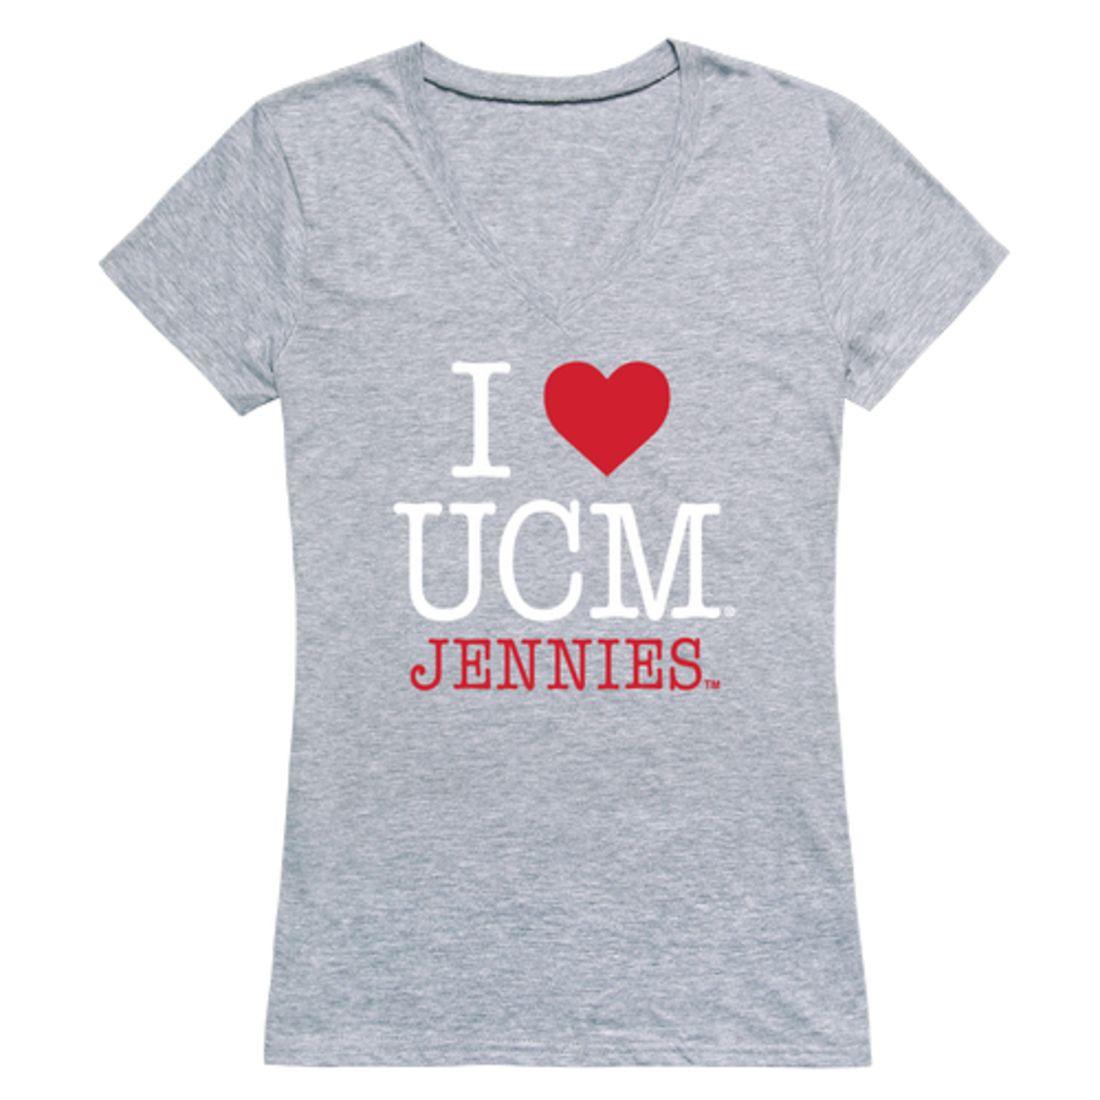 I Love UCM University of Central Missouri Mules Womens T-Shirt-Campus-Wardrobe